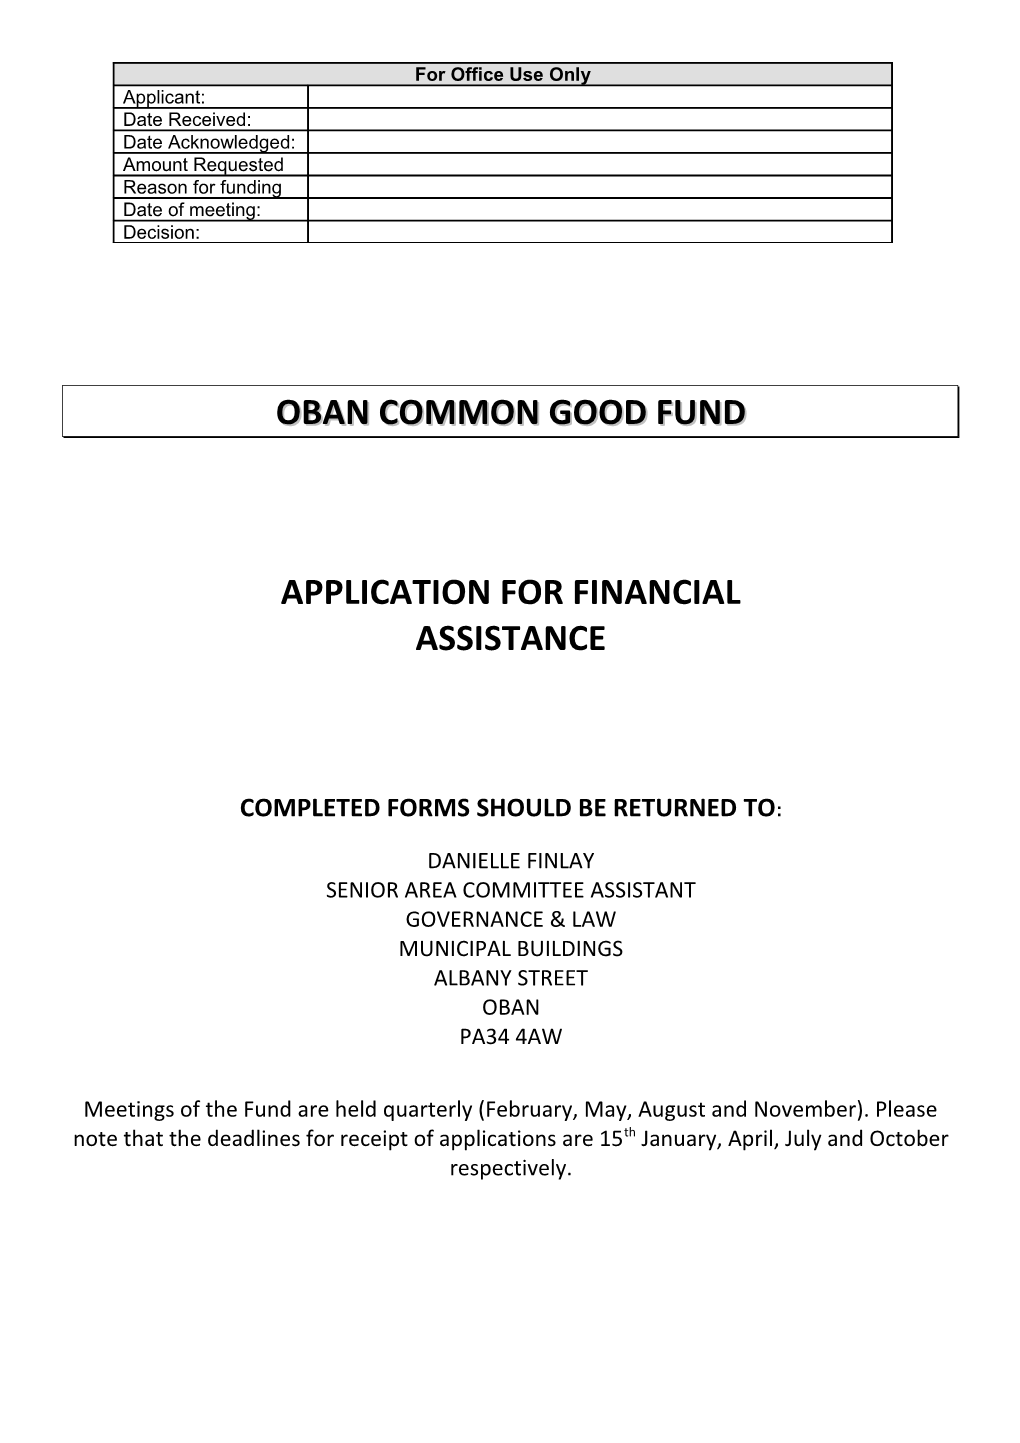 Oban Common Good Fund